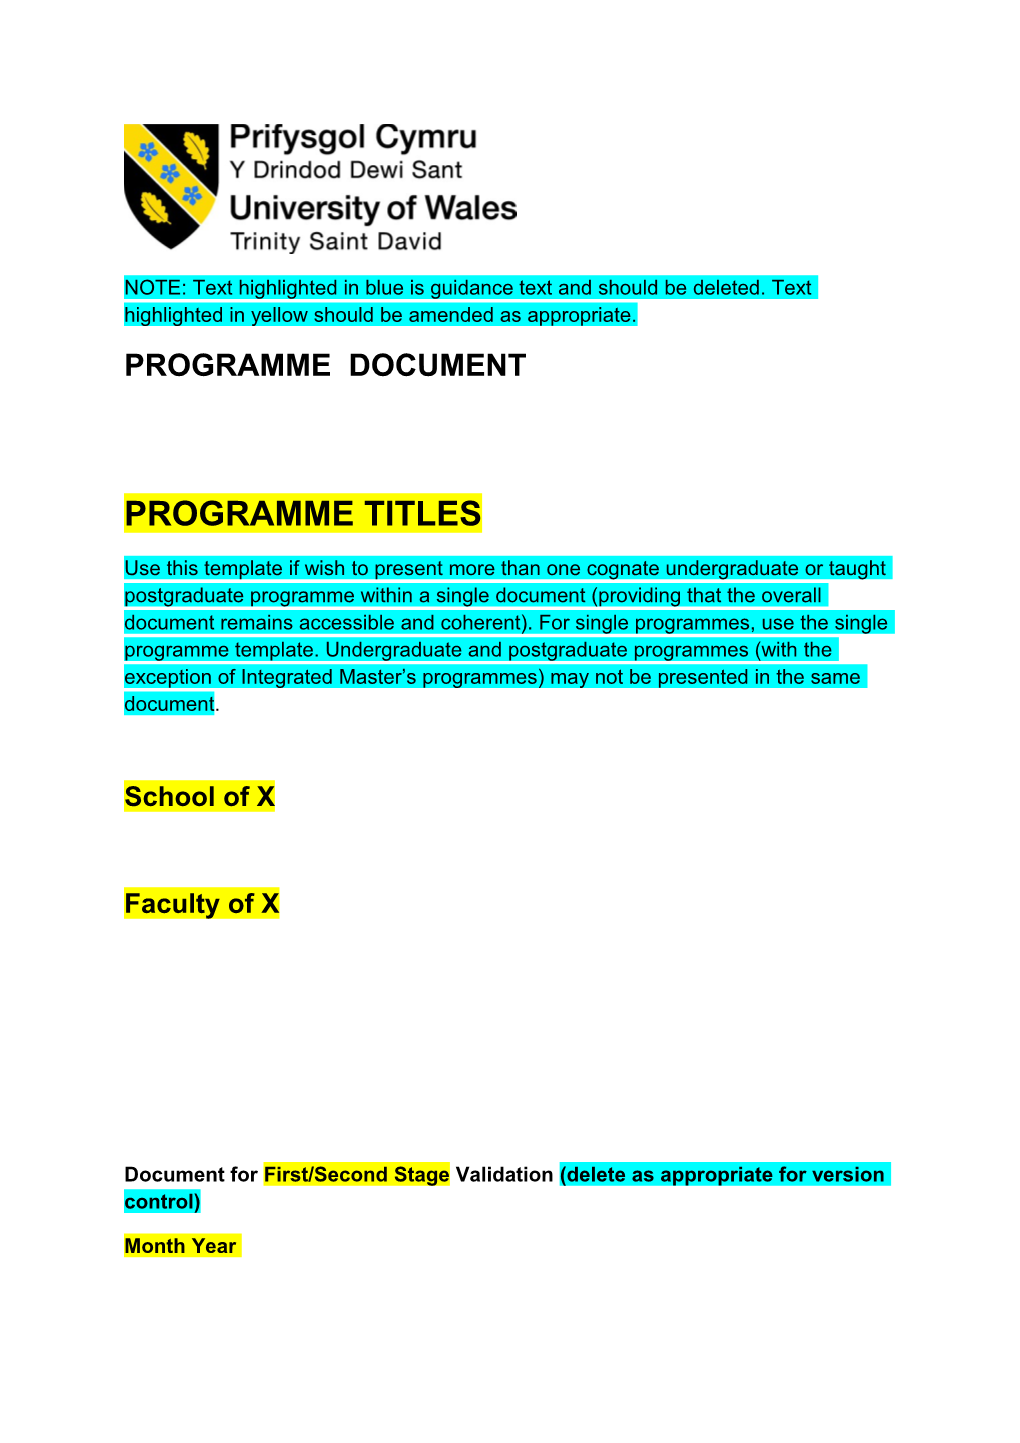 Programme Document